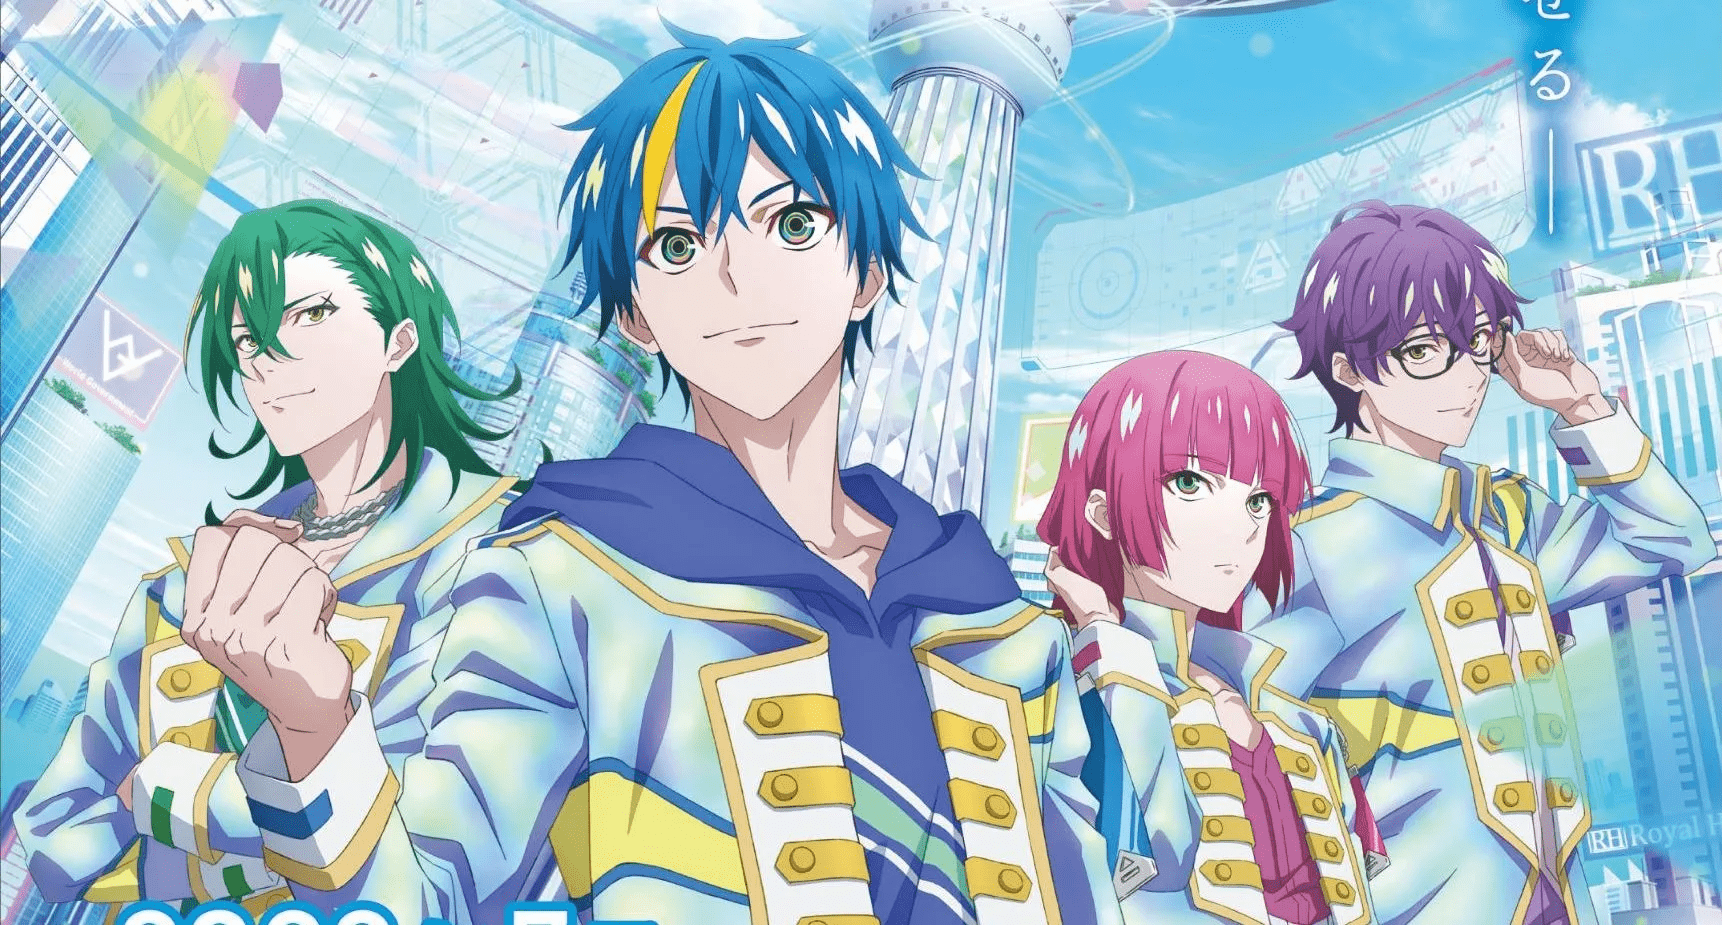 Idols Anime | Anime-Planet